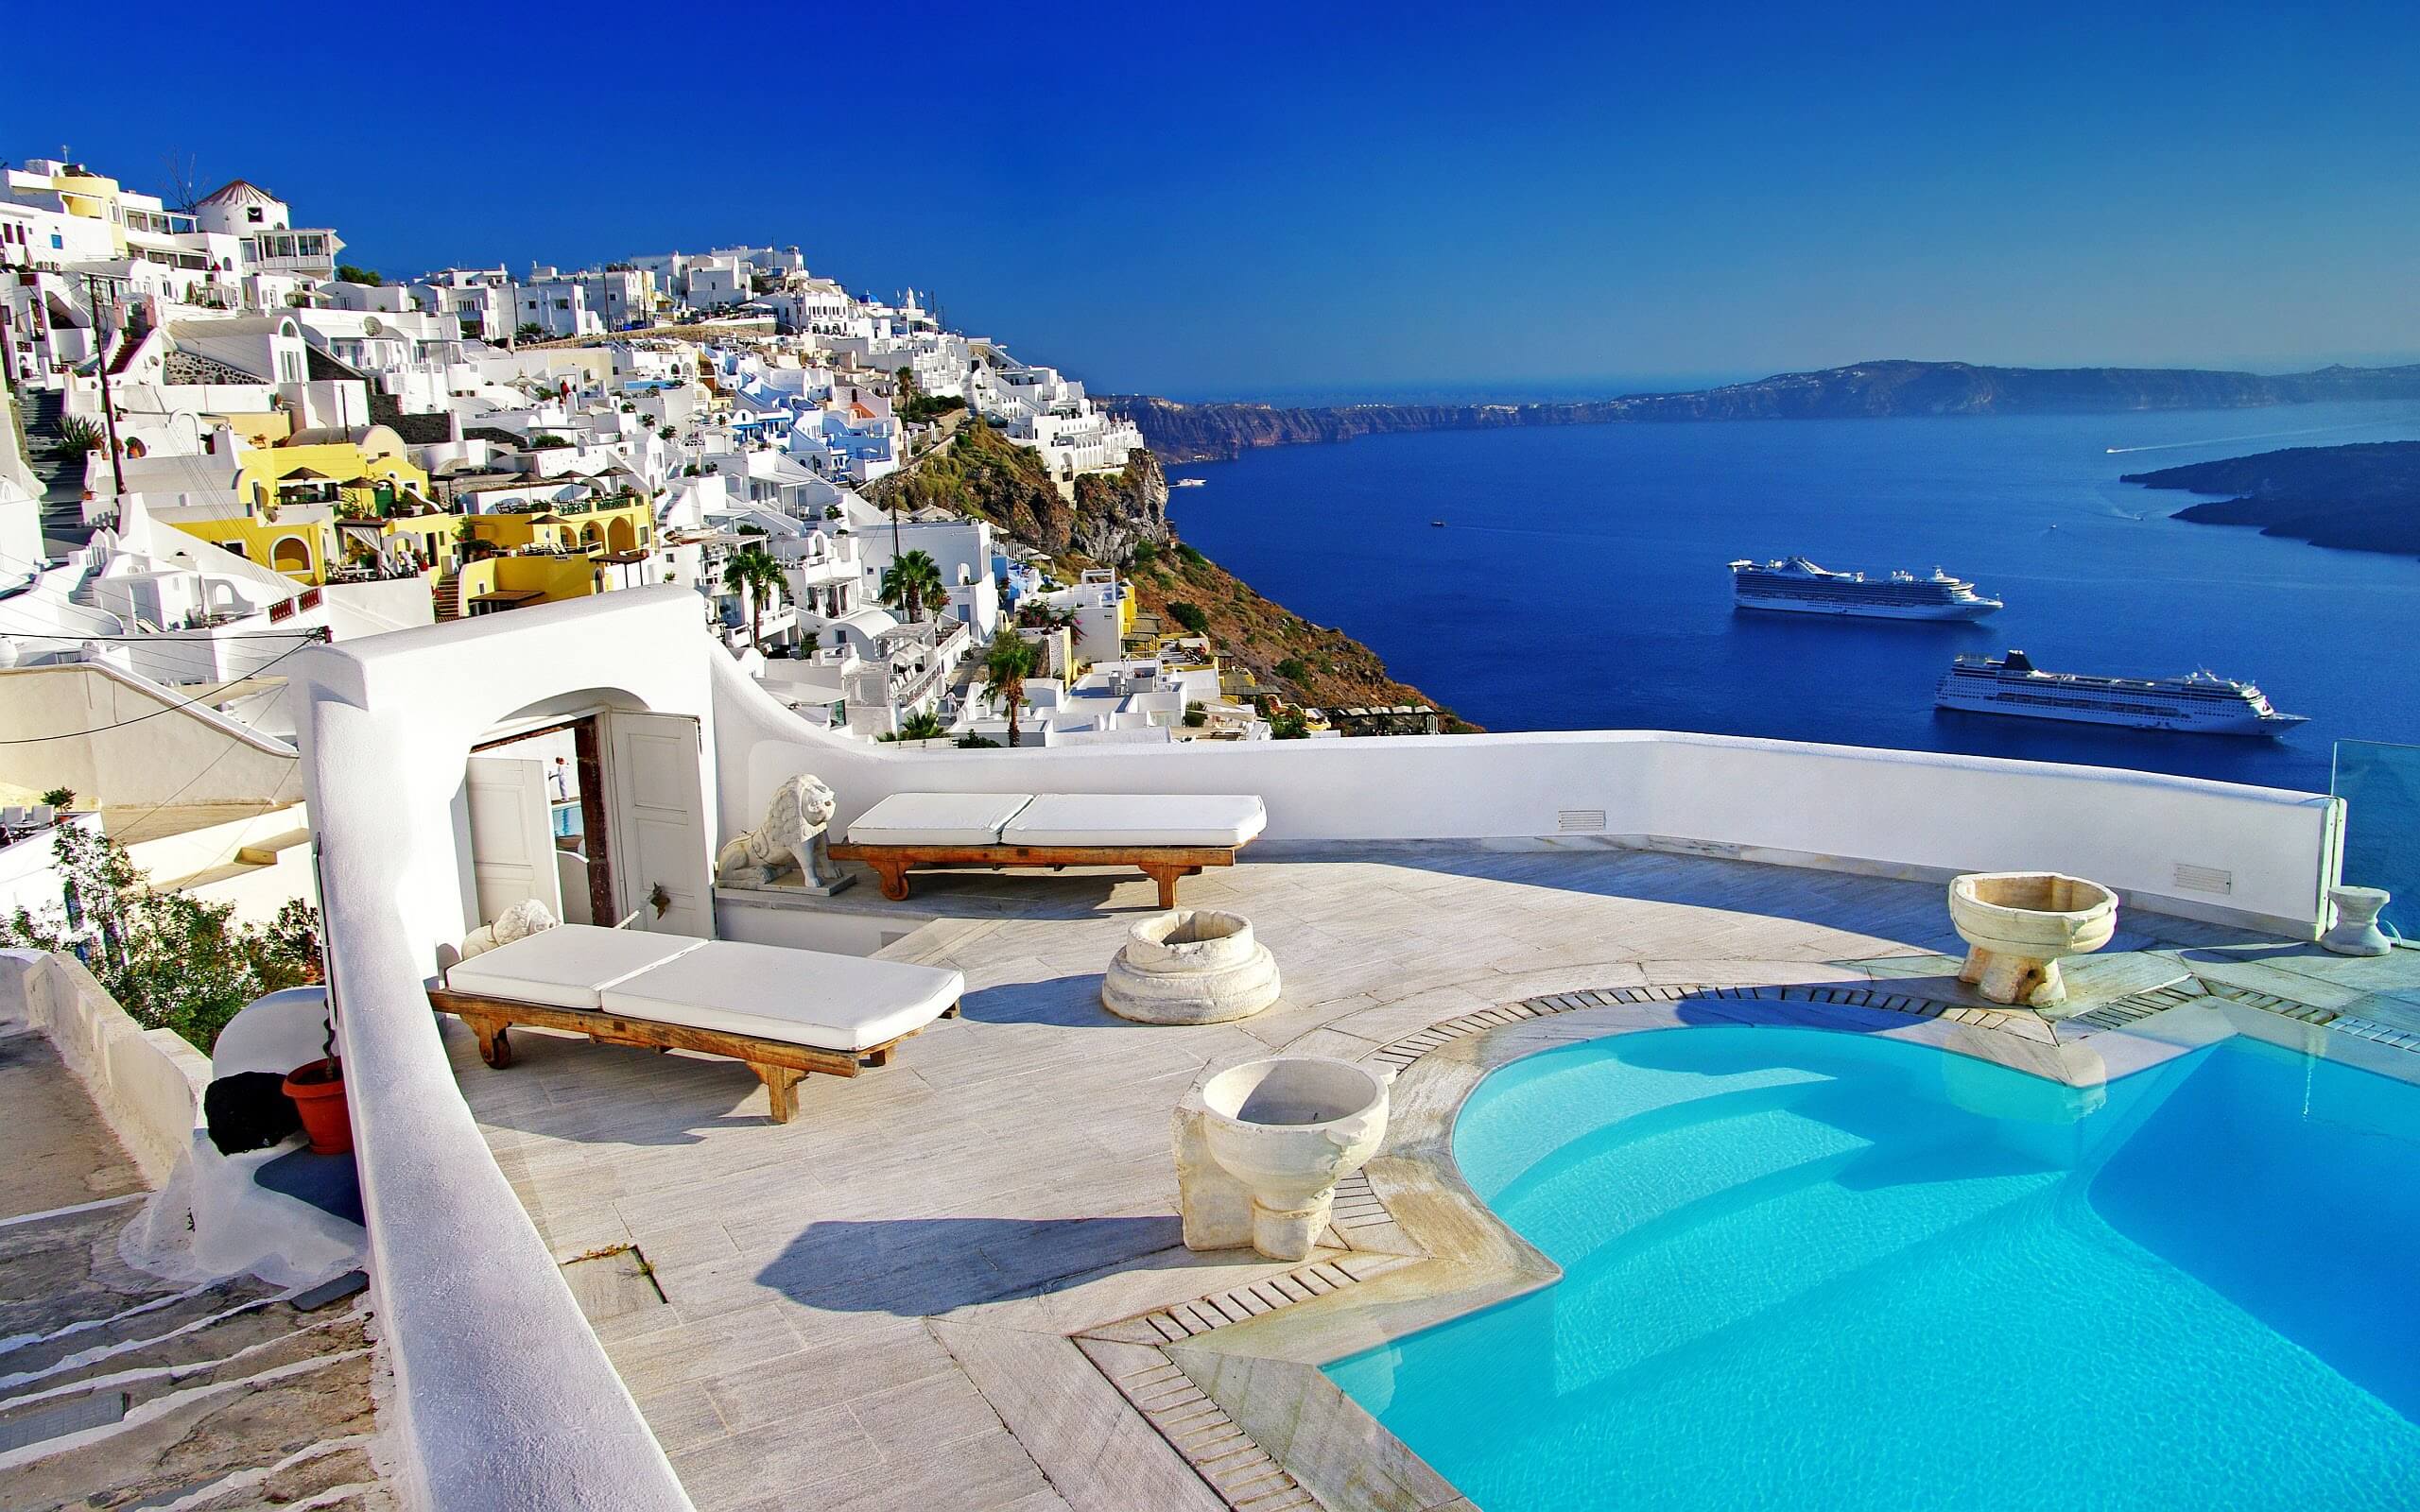 Santorini, Greece: solo travel destinations